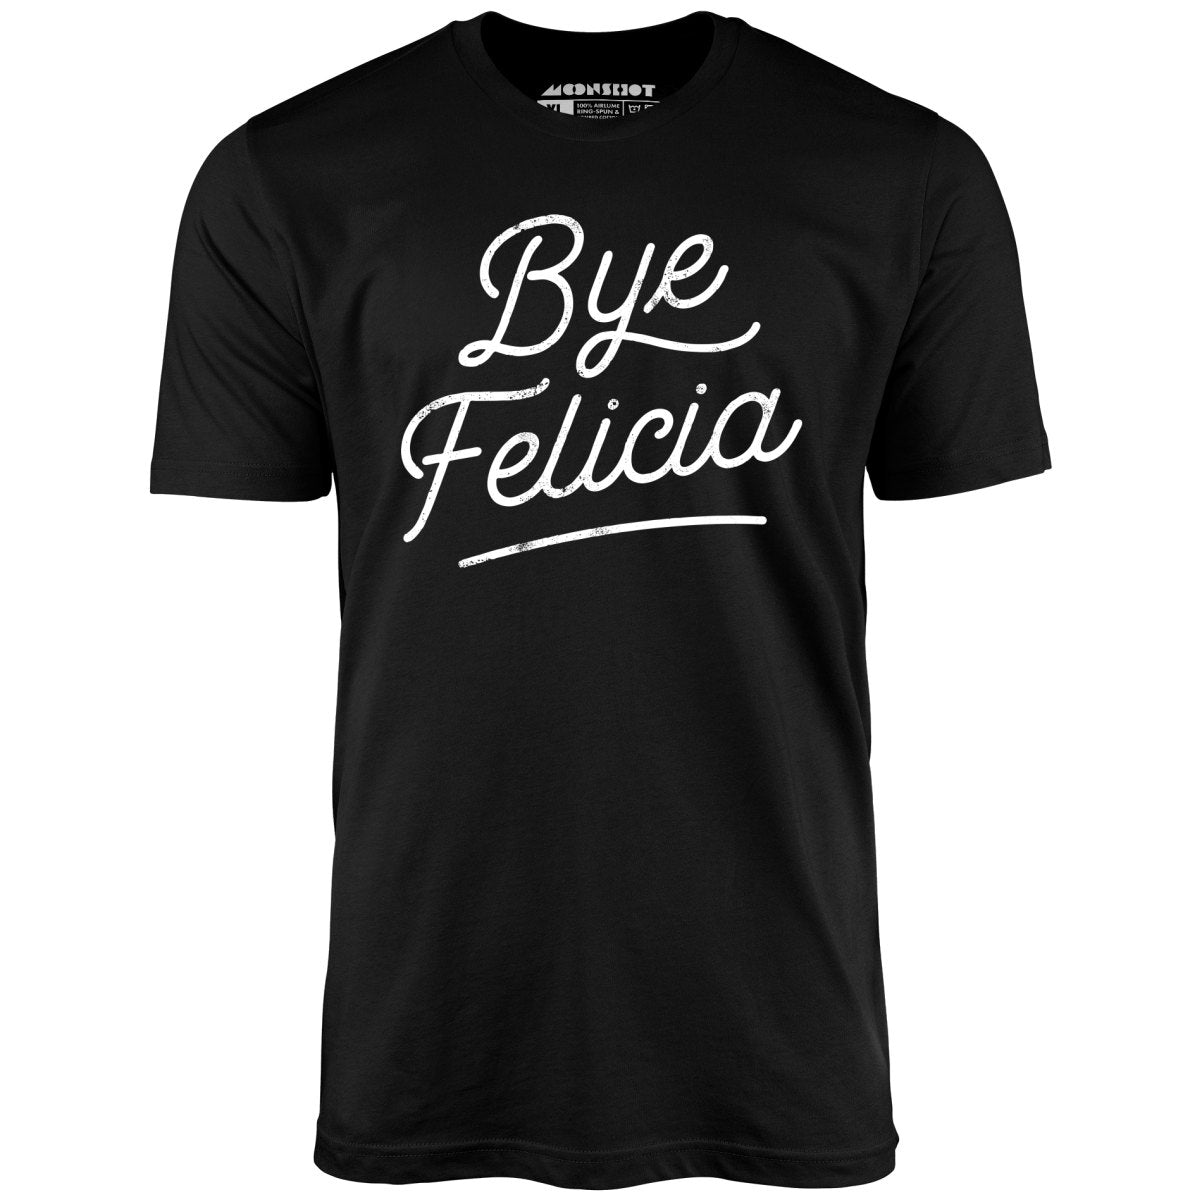 Bye Felicia - Unisex T-Shirt